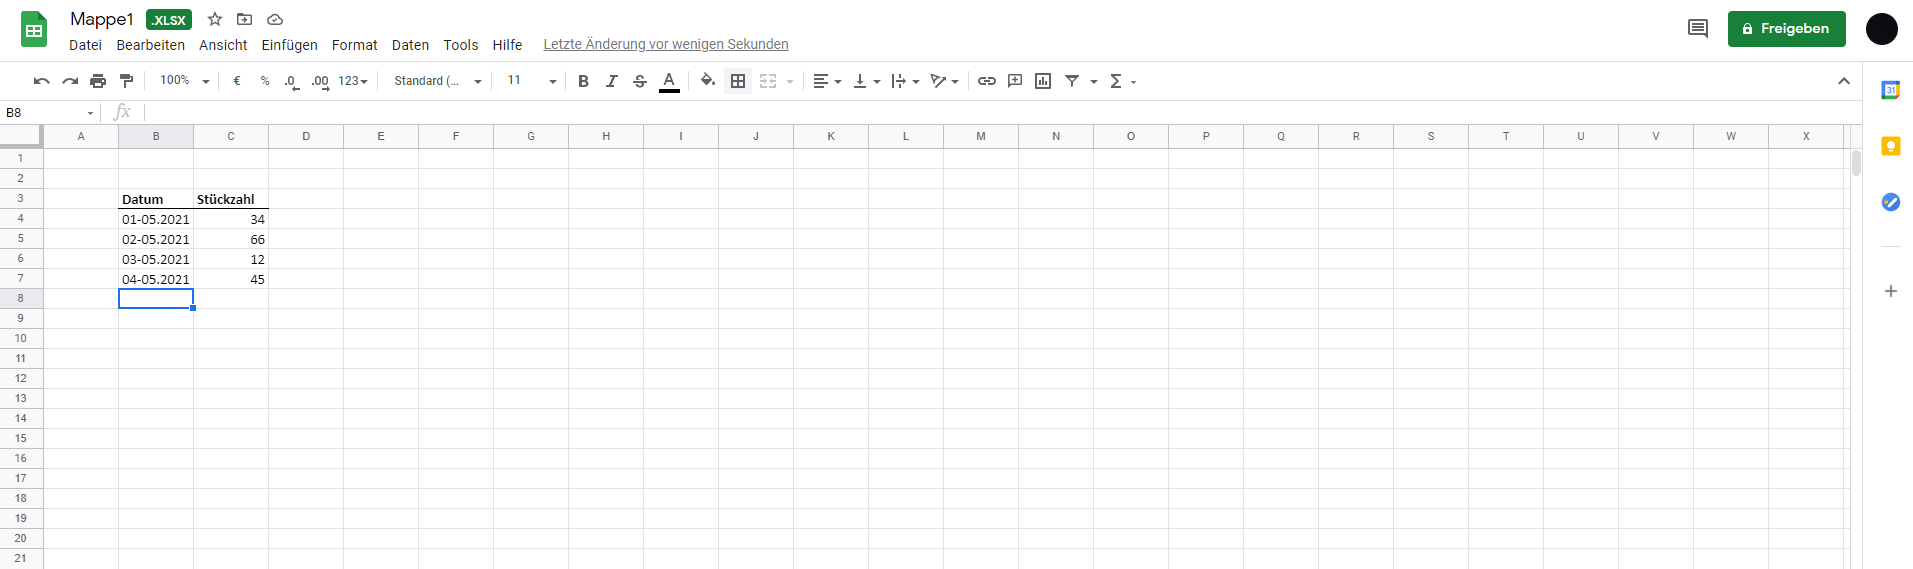 Geöffnete Excel-Datei in Google Tabellen (Sheets)